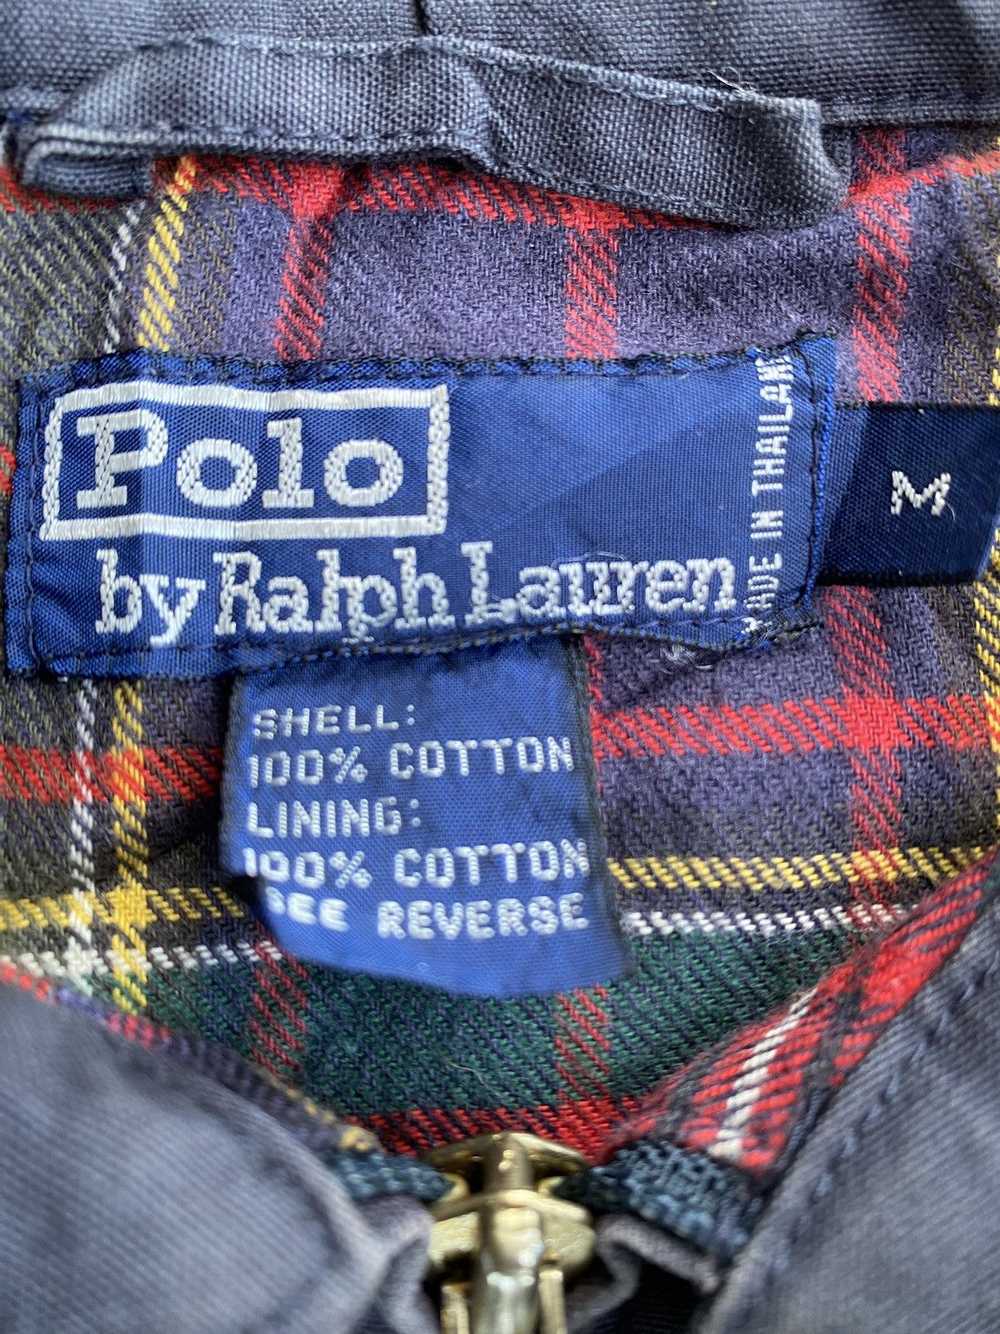 Polo Ralph Lauren Polo by Ralph Lauten Jackets - image 5